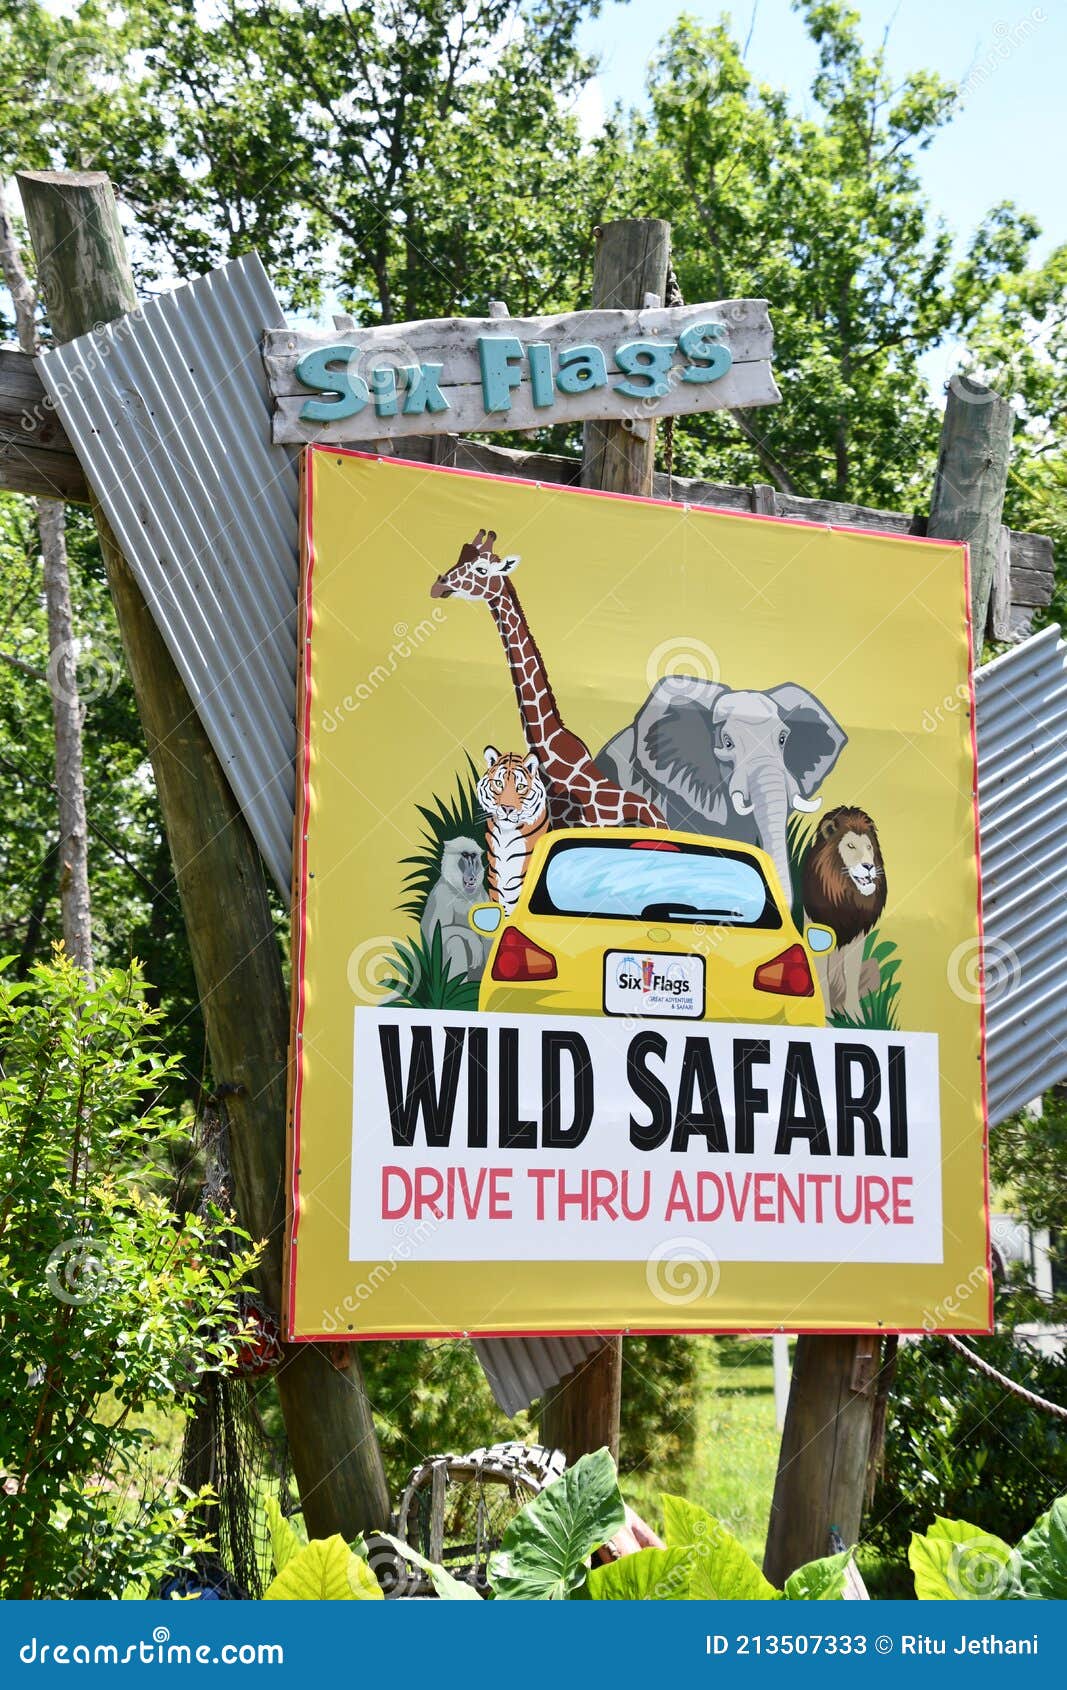 six flags safari drive thru